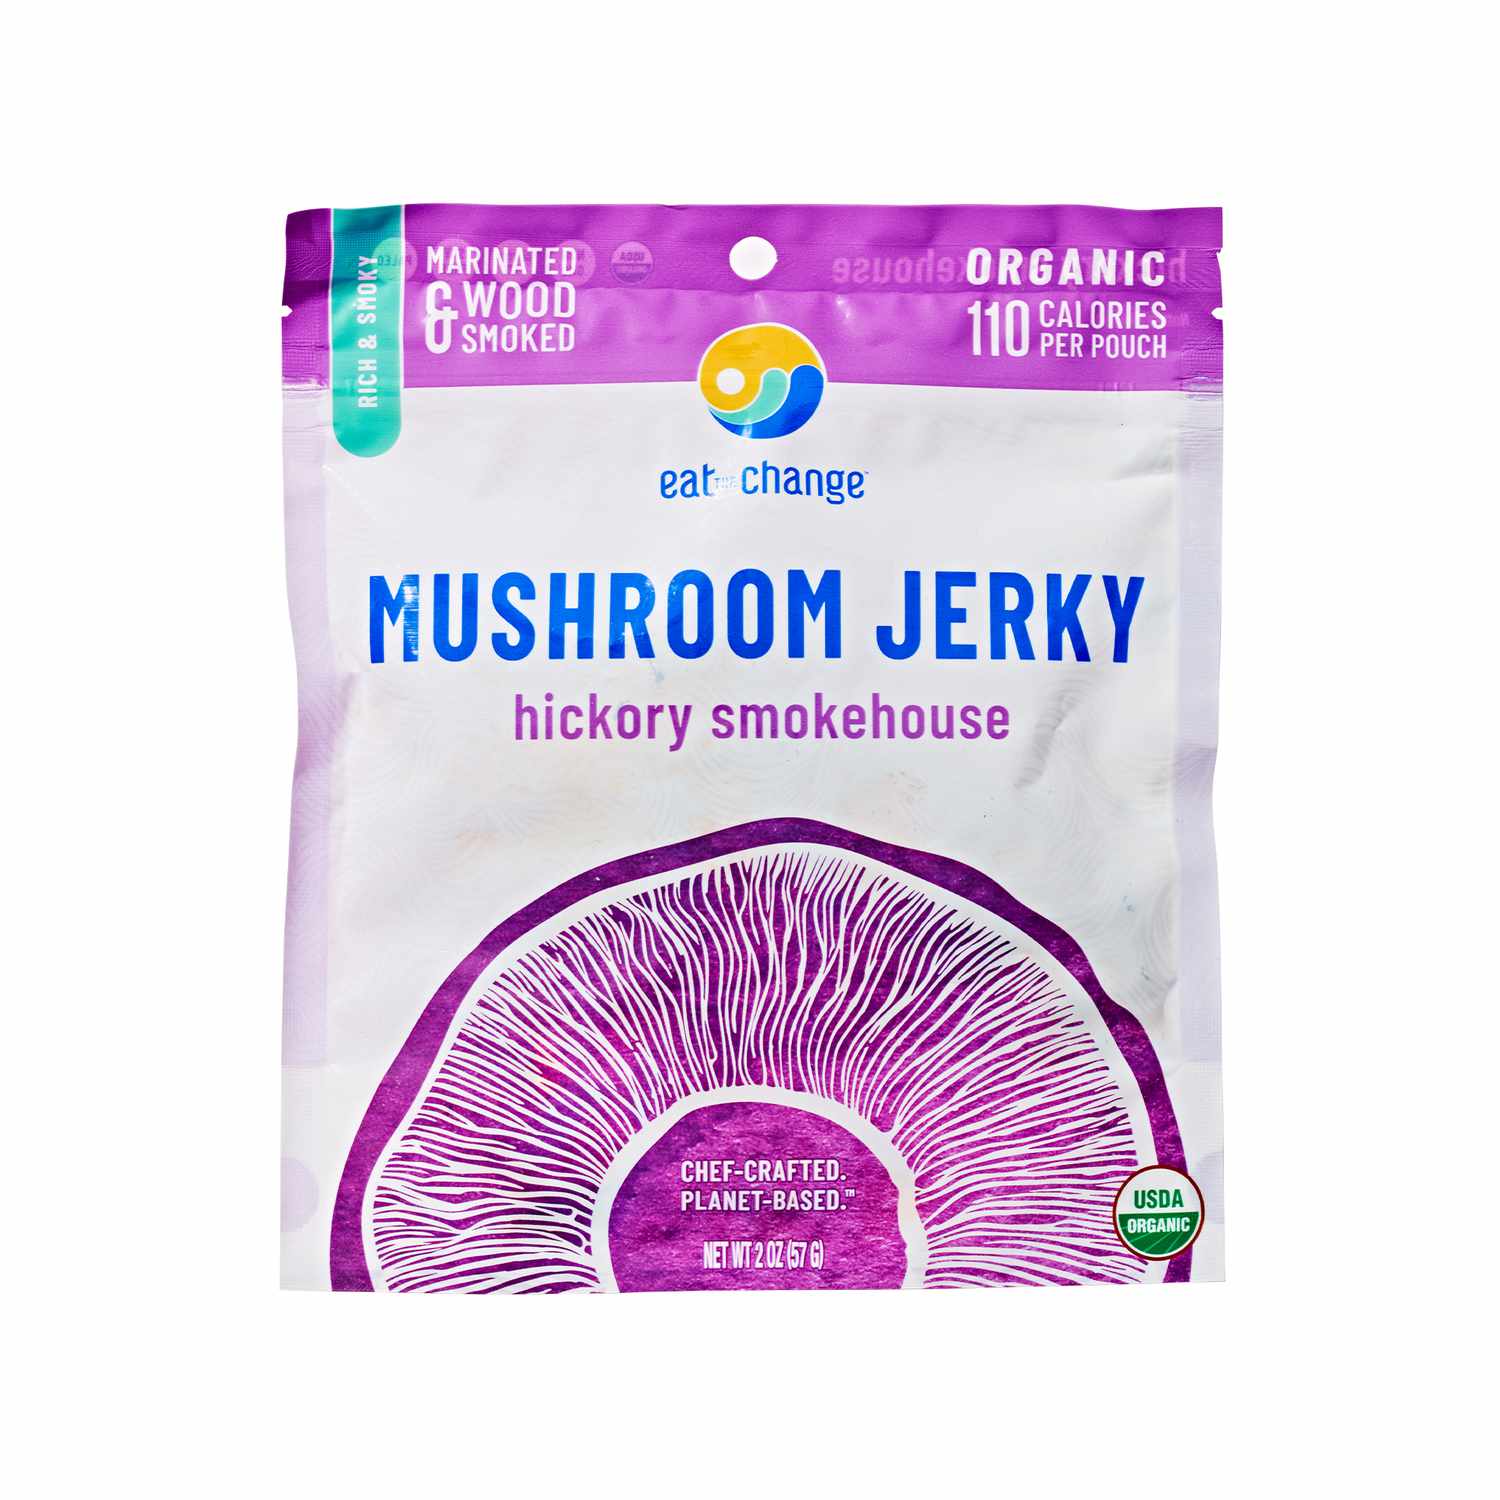 Eat the Change Mushroom Jerky: Hickory Smokehouse